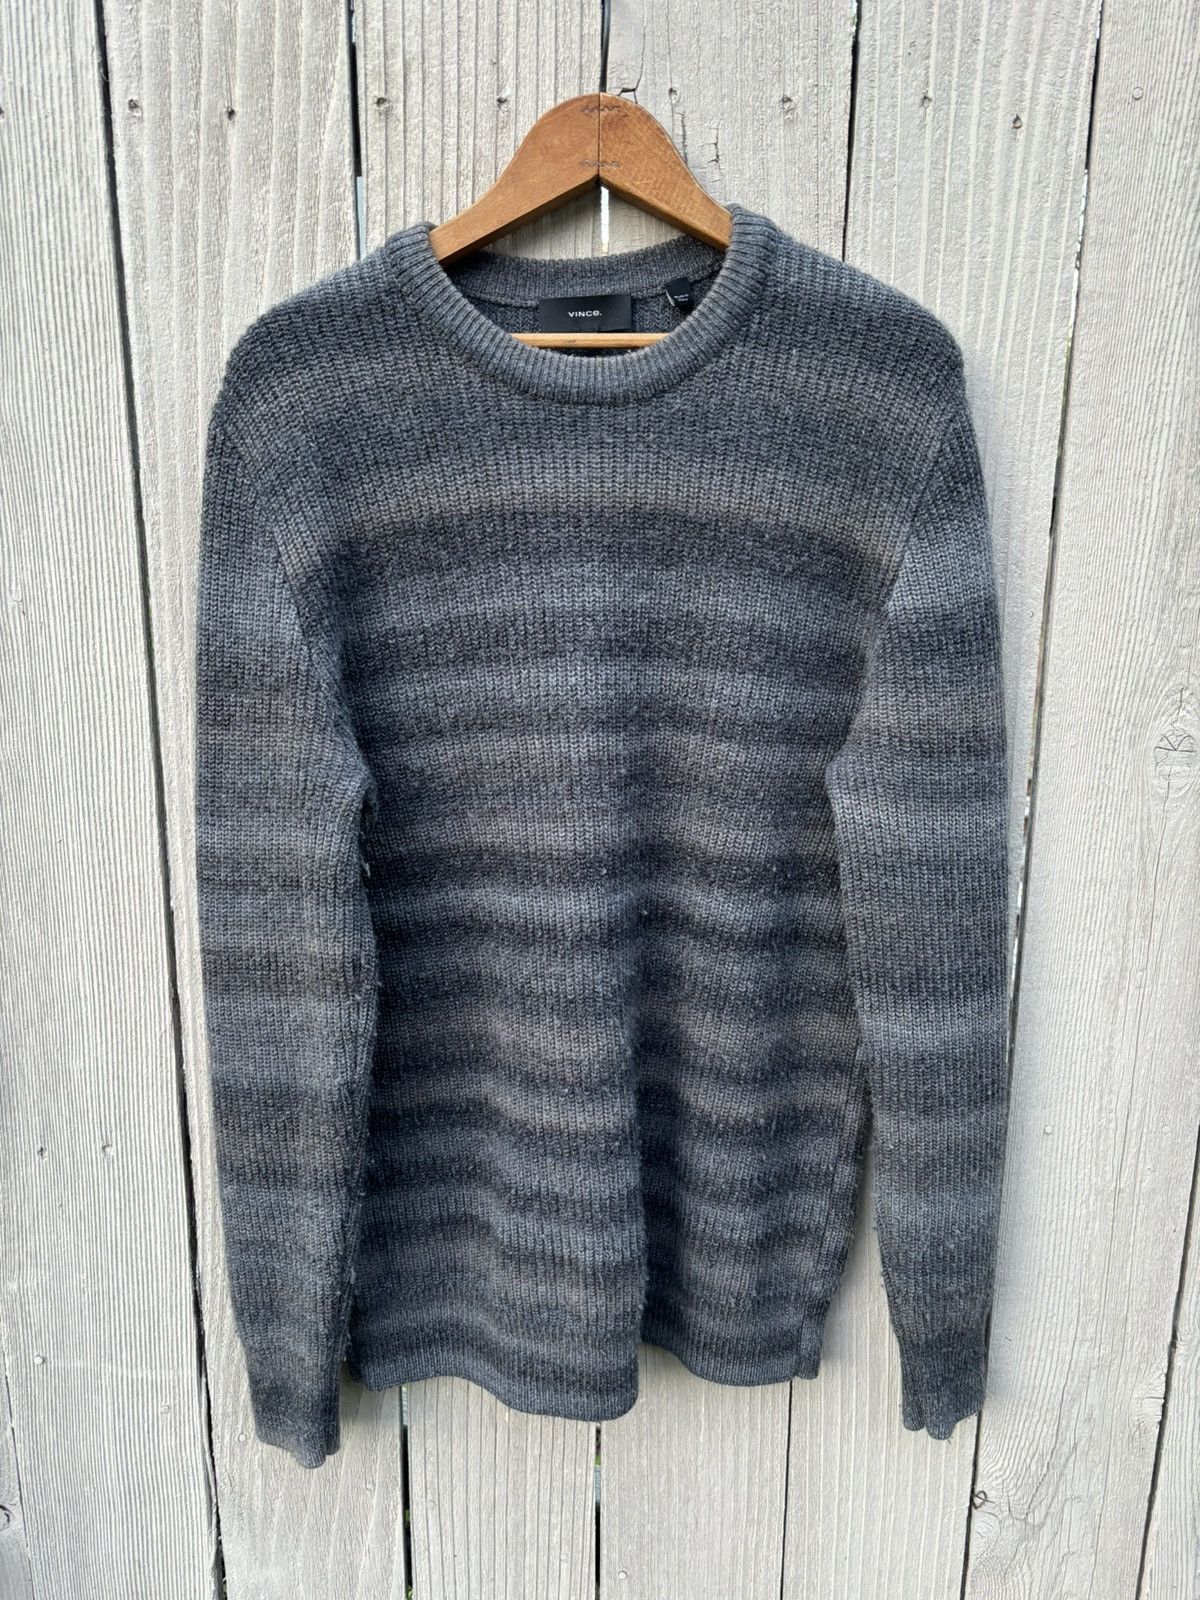 Vince Grey Striped Cashmere Blend Sweater Size US M / EU 48-50 / 2 - 1 Preview